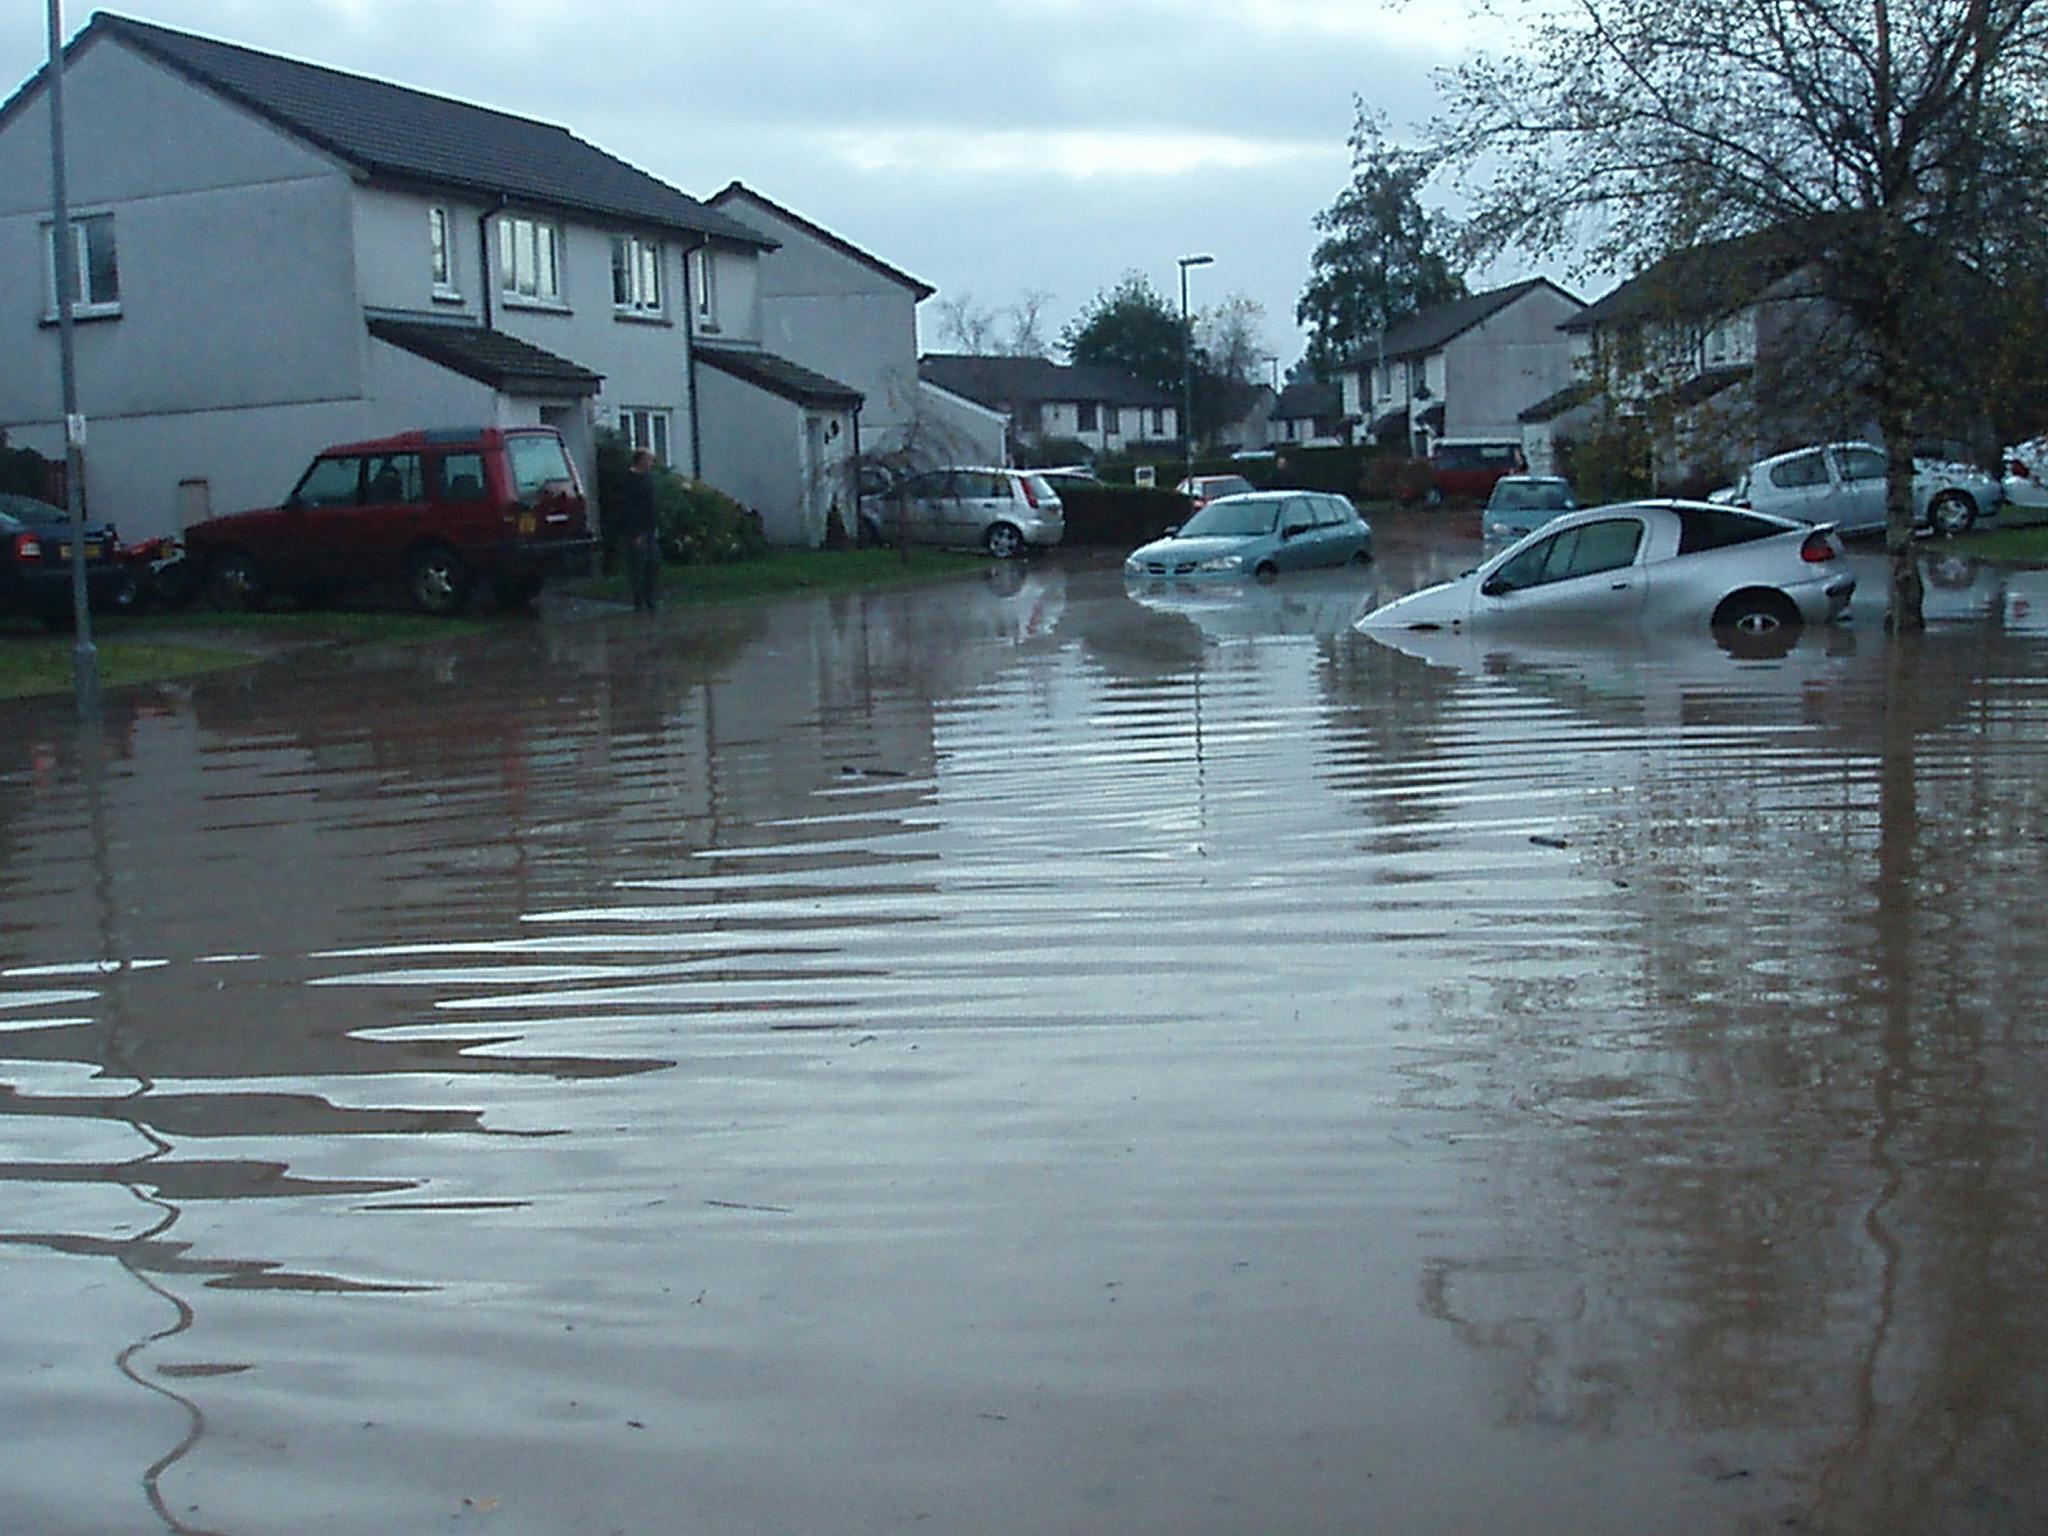 Aberdeen Close full of flood water  up to car bonnet level